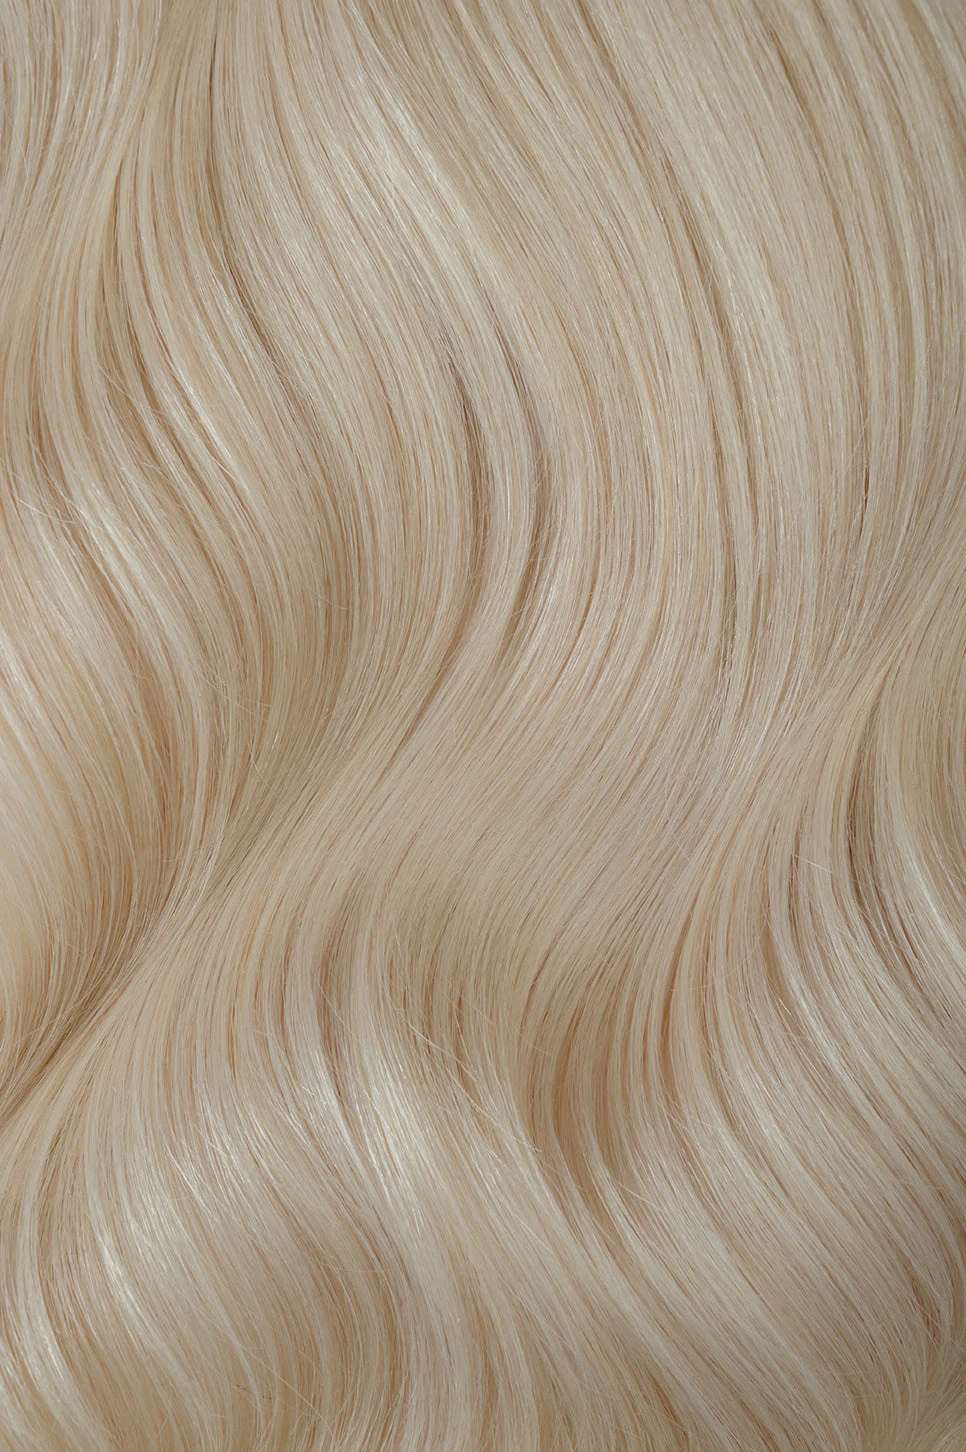 #60 Whitest Ash Blonde Clip-In Bun Extension